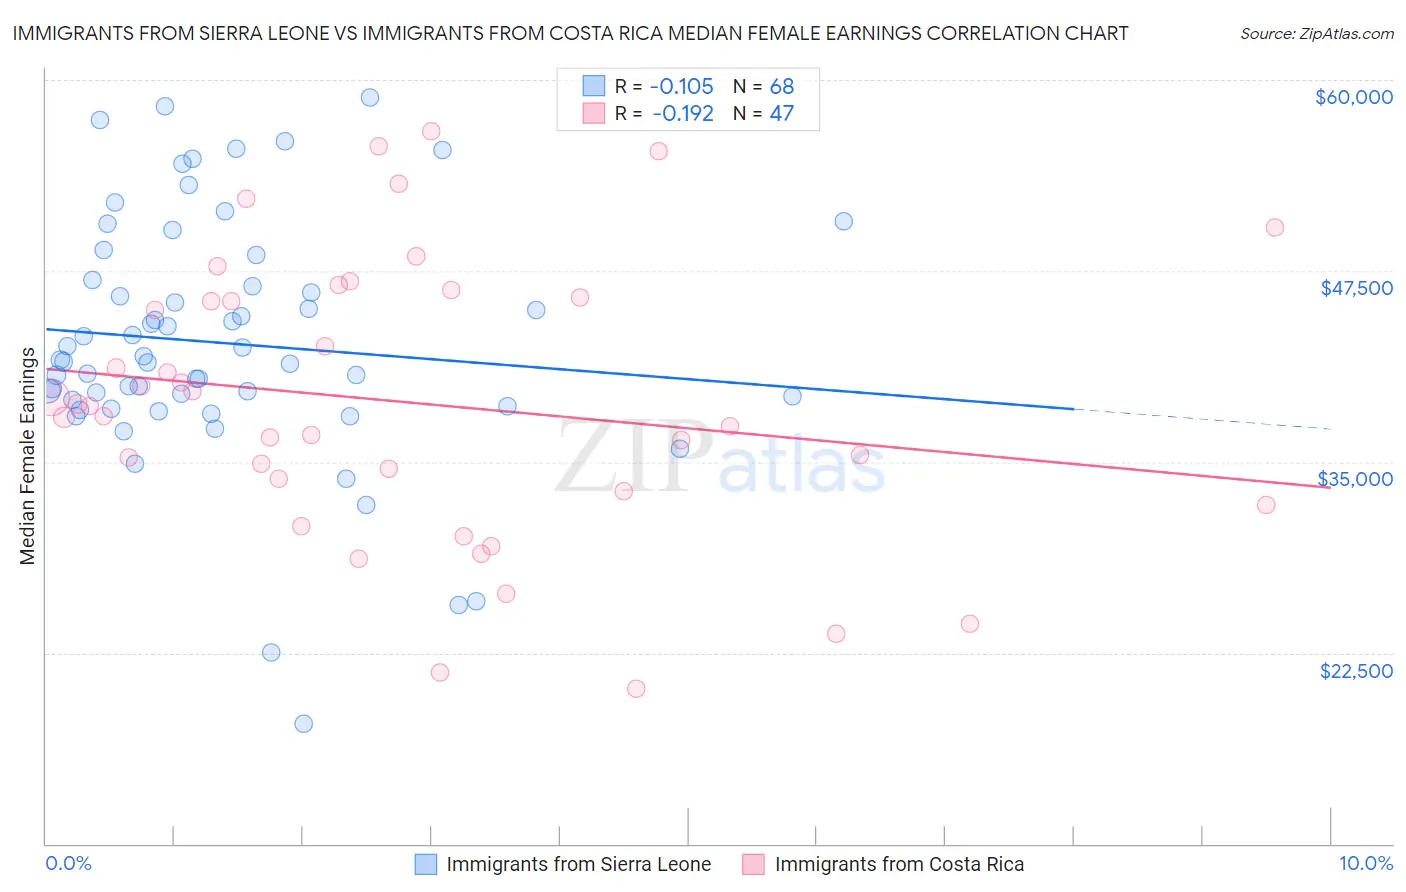 Immigrants from Sierra Leone vs Immigrants from Costa Rica Median Female Earnings